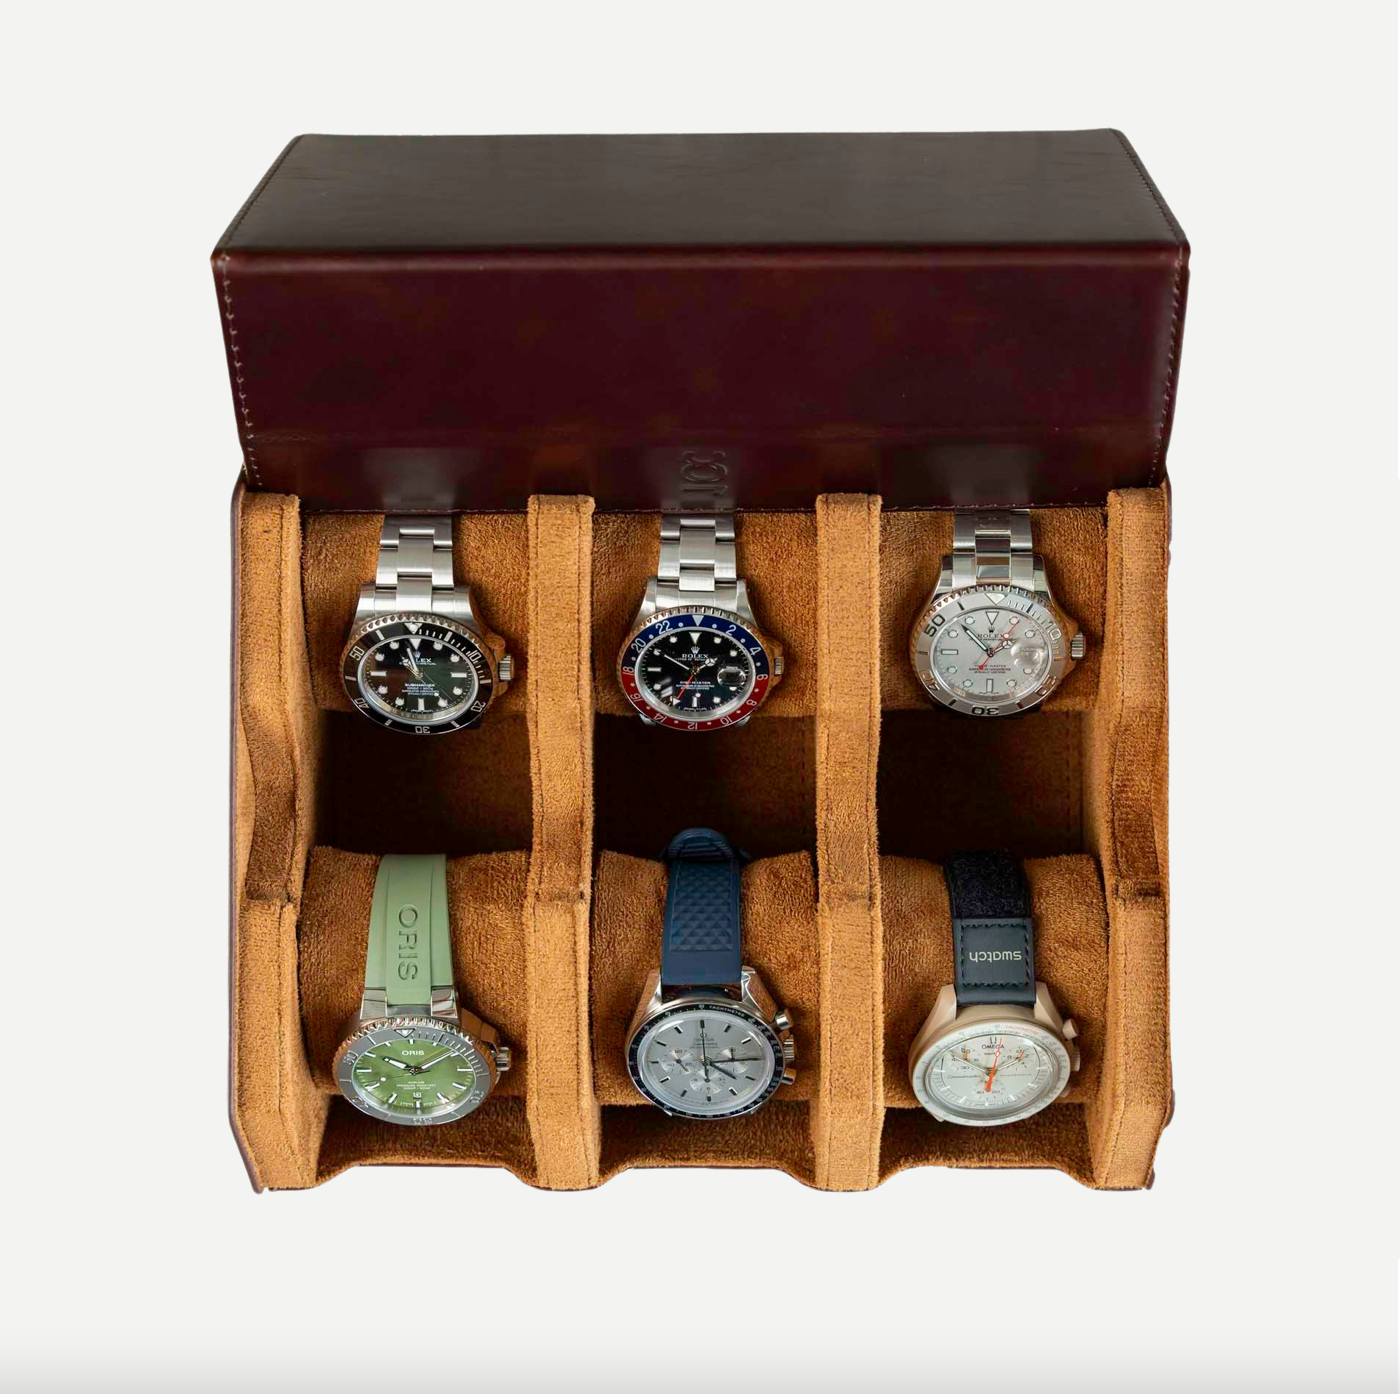 Hexagon Coffee Brown 6 Slot Watch Box